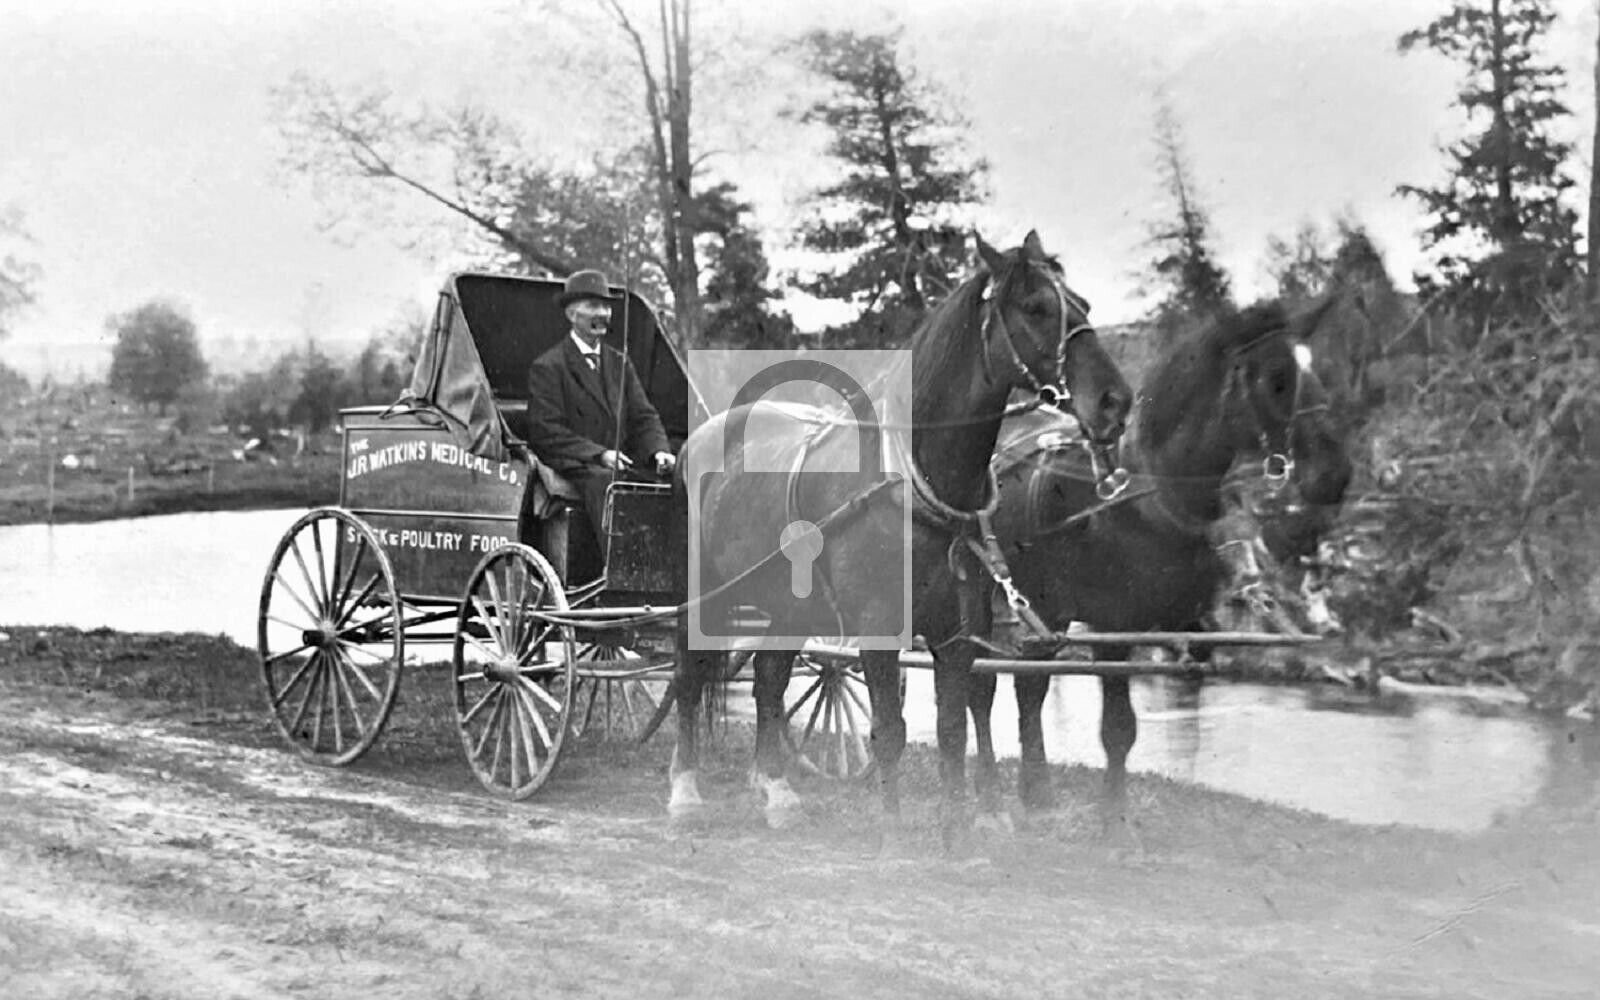 JR Watkins Medical Drug Co Horse Drawn Wagon Reprint Postcard